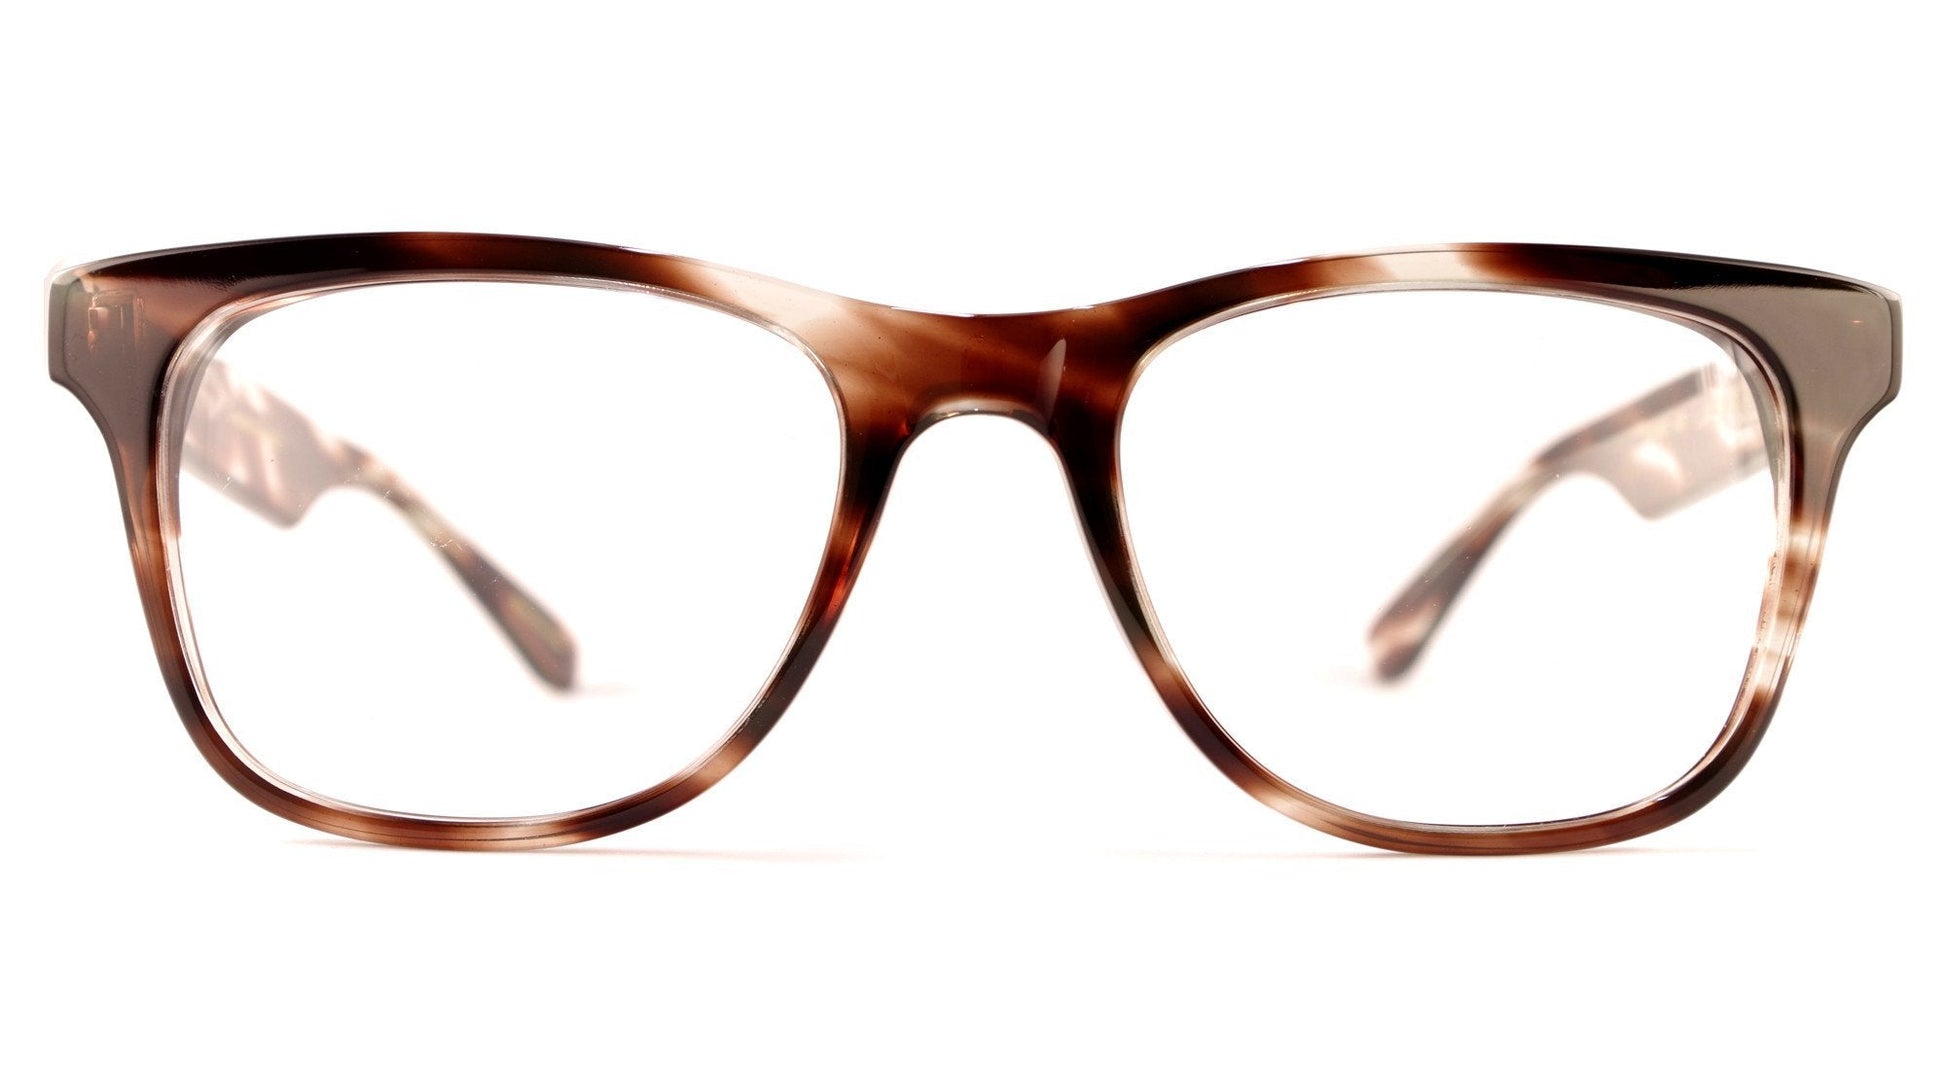 LDNR Sloane 003 Glasses (Brown)